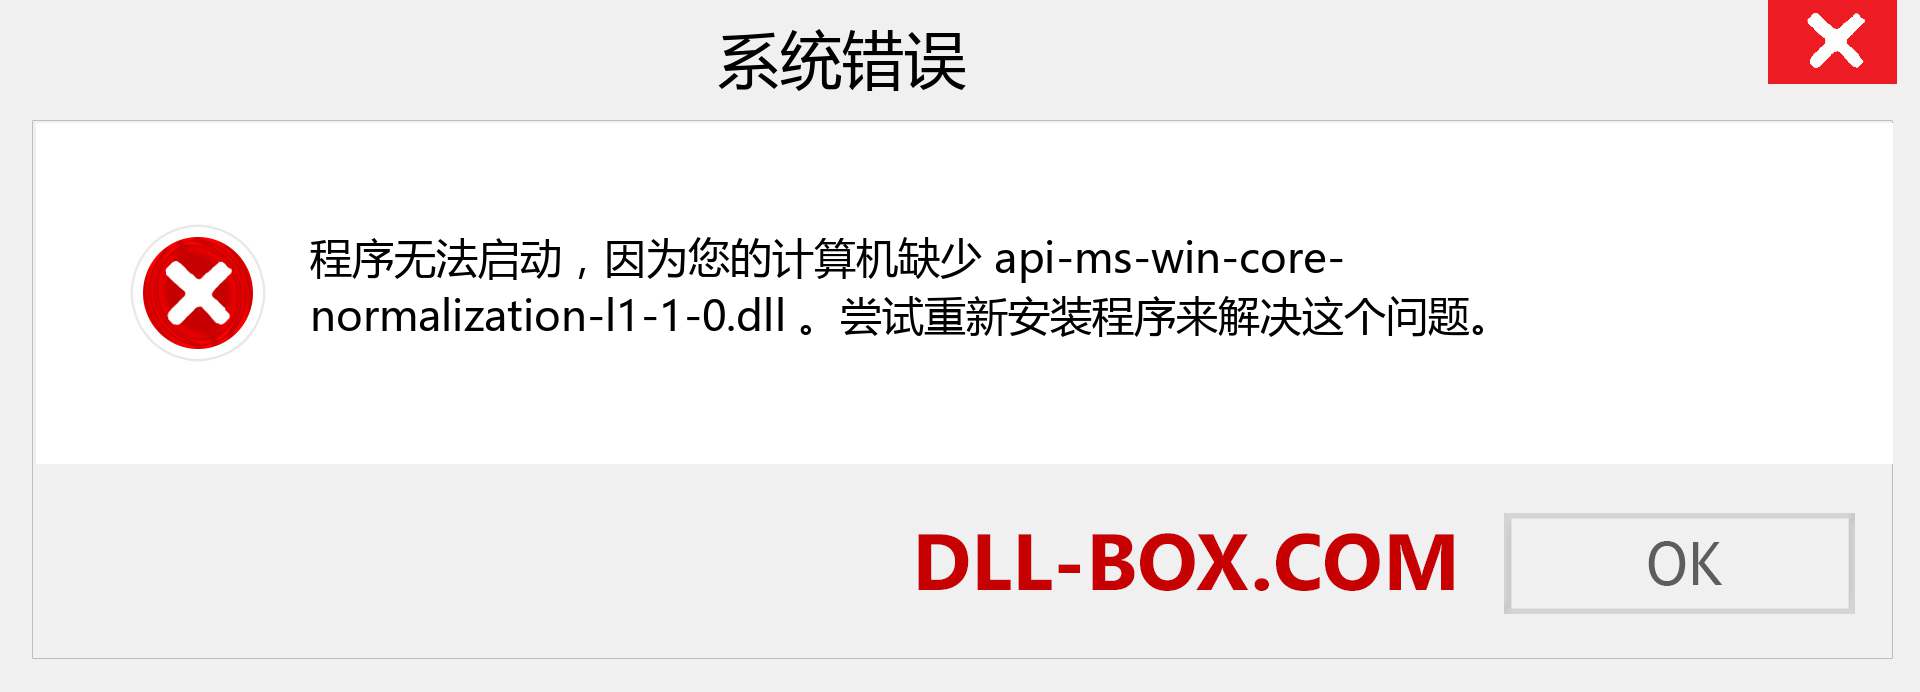 api-ms-win-core-normalization-l1-1-0.dll 文件丢失？。 适用于 Windows 7、8、10 的下载 - 修复 Windows、照片、图像上的 api-ms-win-core-normalization-l1-1-0 dll 丢失错误